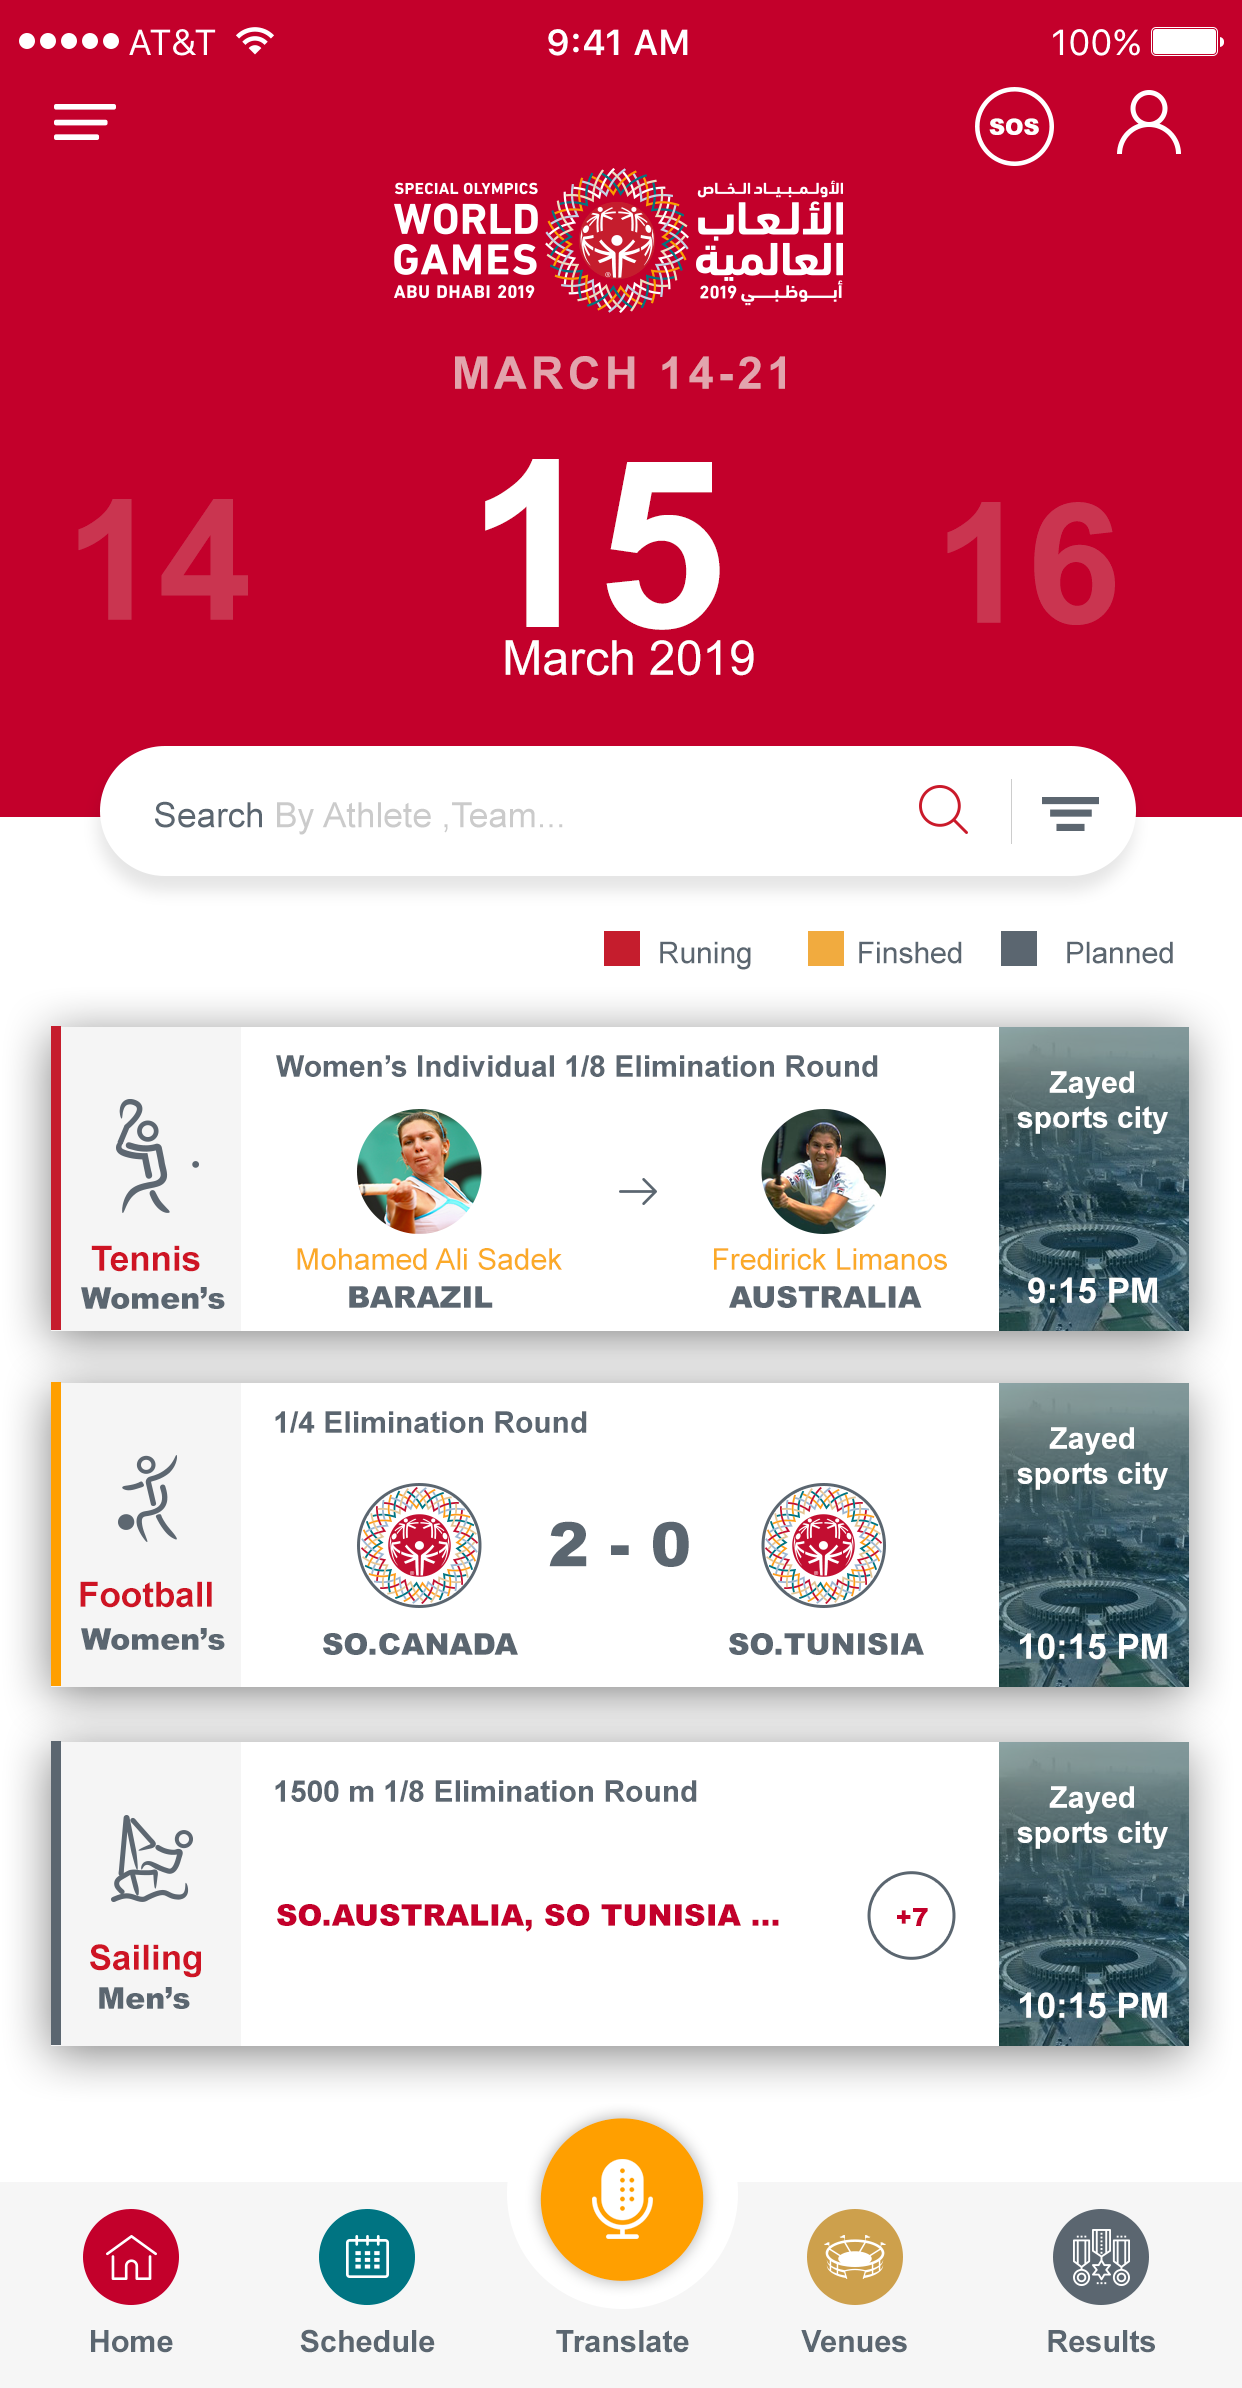 World Games Abu Dhabi 2019 screenshot game